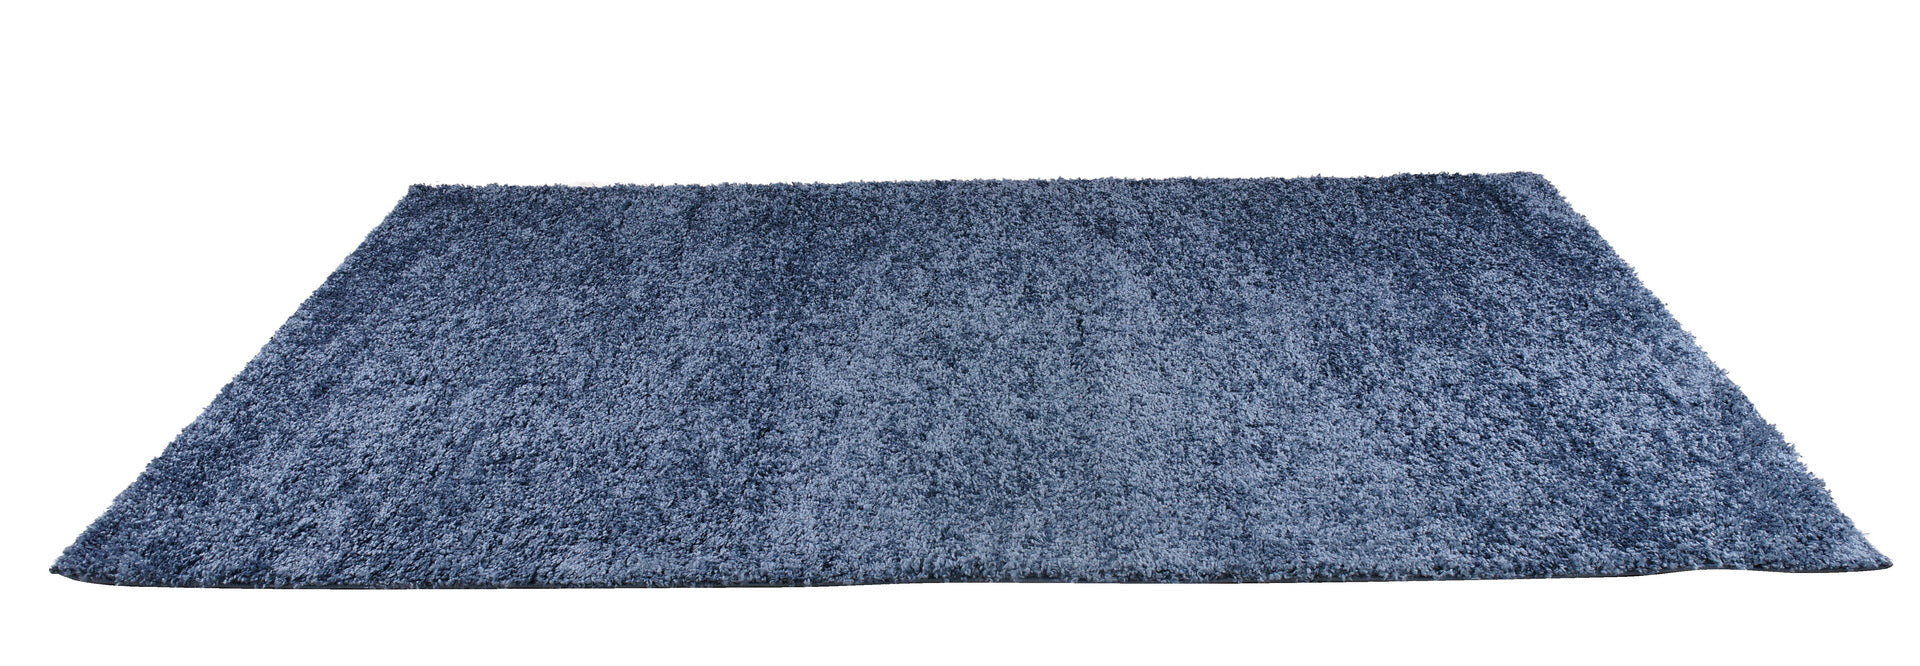 ladole rugs solid color shaggy meknes durable beautiful turkish indoor small mat doormat rug in blue 110 x 211 57cm x 90cm 6x8, 6x9 ft Living Room, Bedroom, Dining Area, Kitchen Carpet